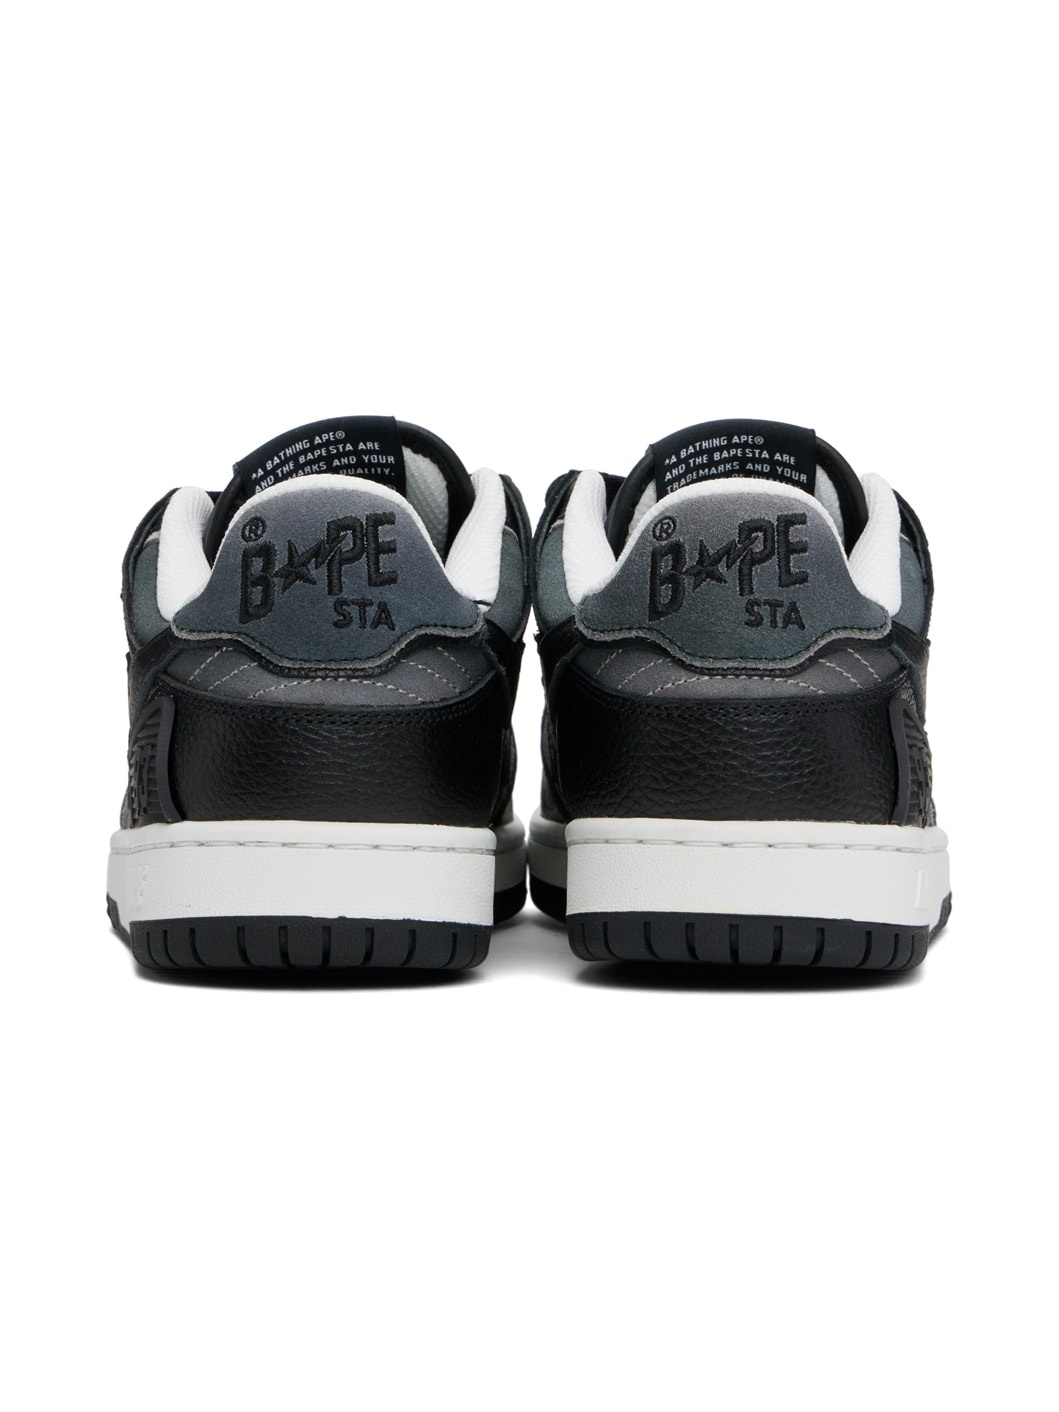 Black Sk8 Sta #4 Sneakers - 2